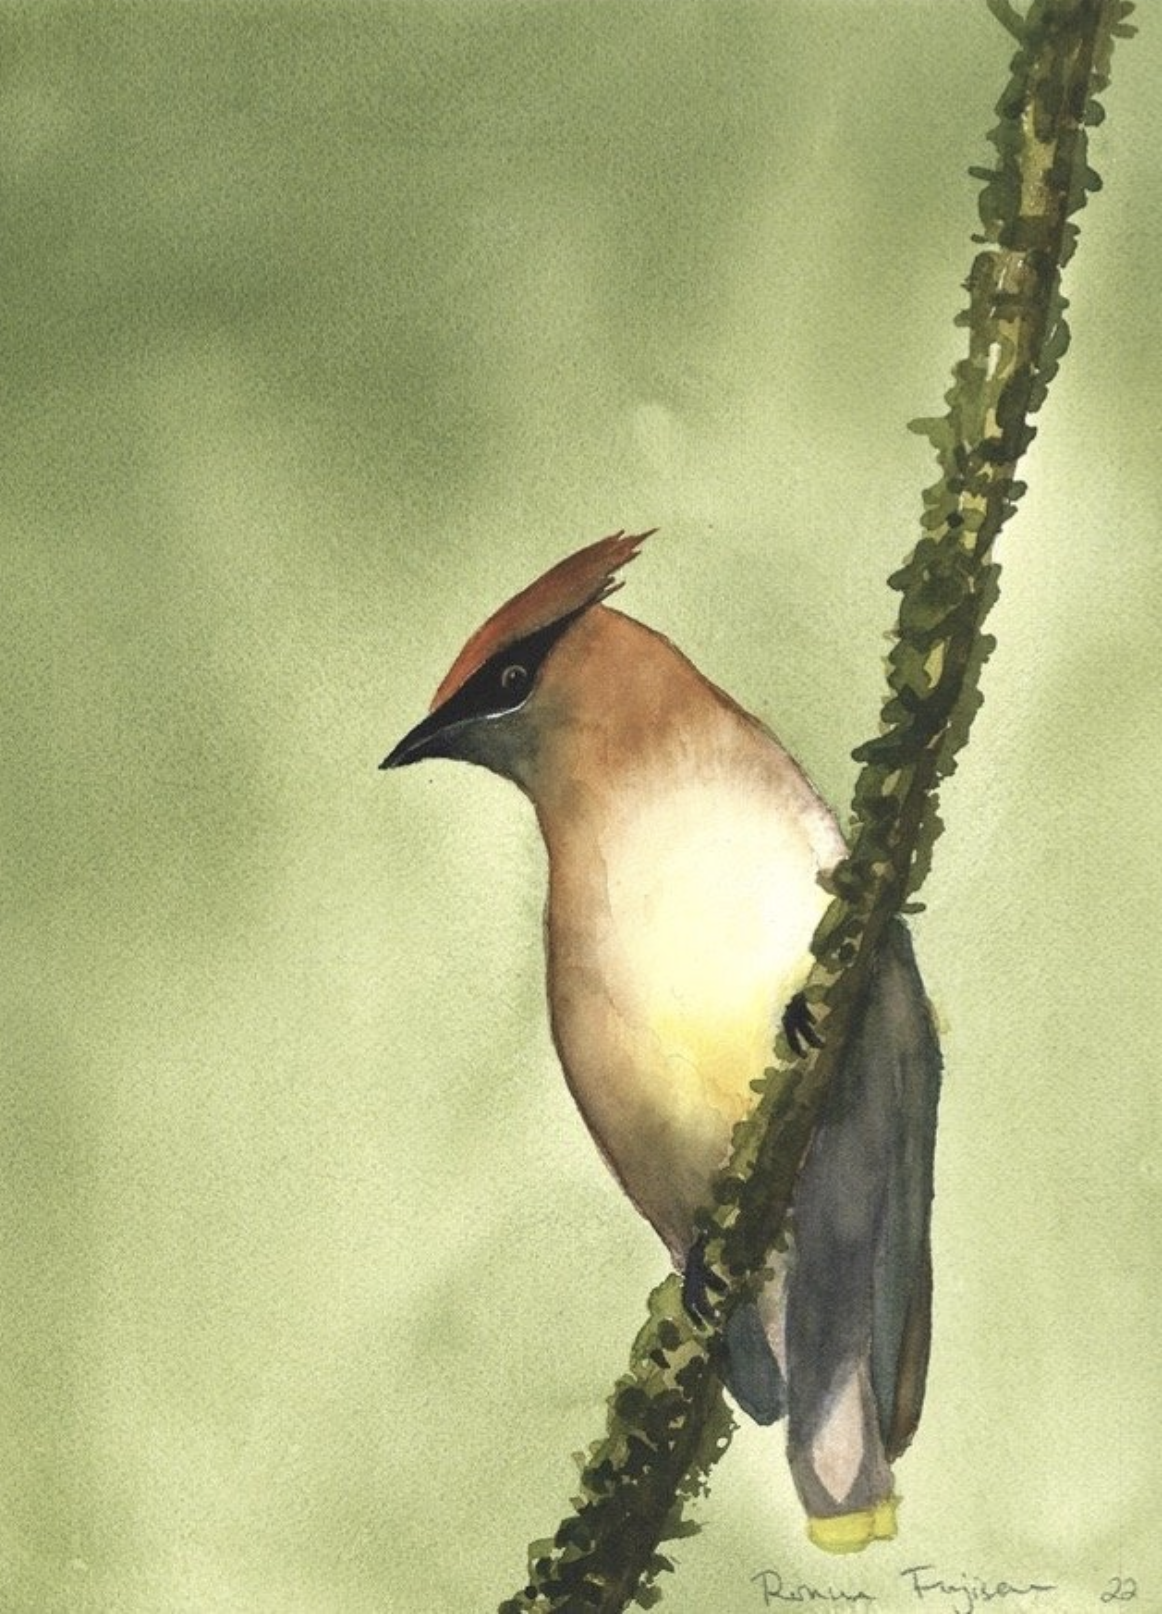 Painting Birds in Watercolor Watercolor Mastery Workshop